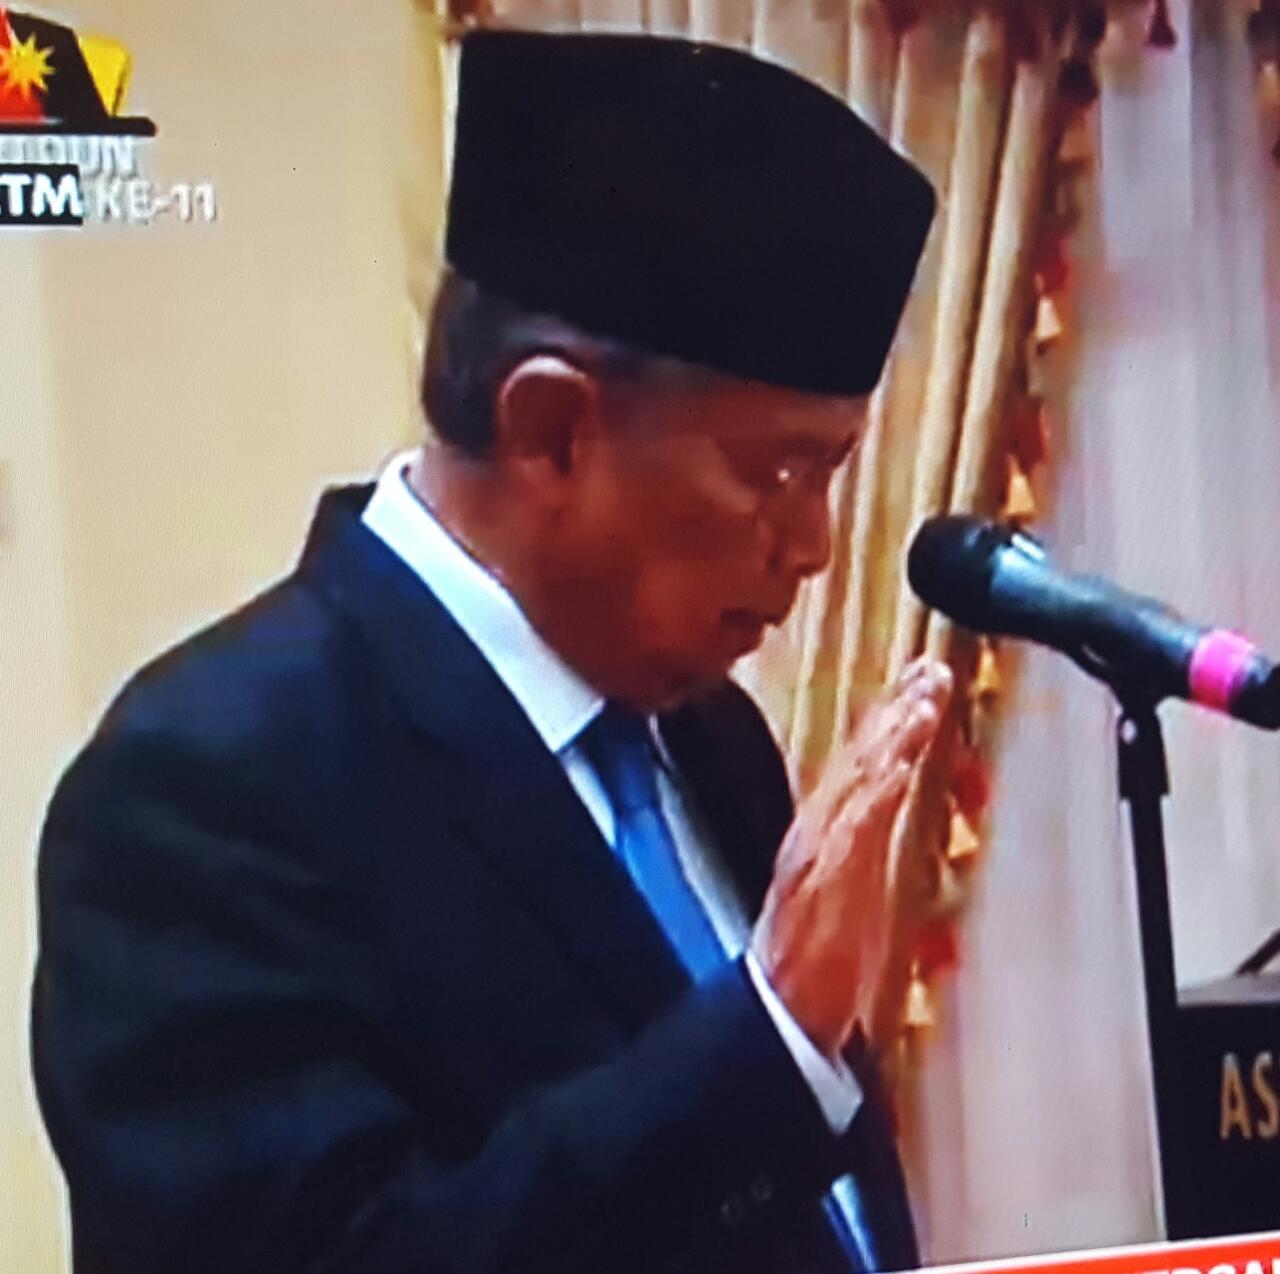 Datuk Patinggi Tan Sri Adenan Satem being sworn in on his second term as chief minister.